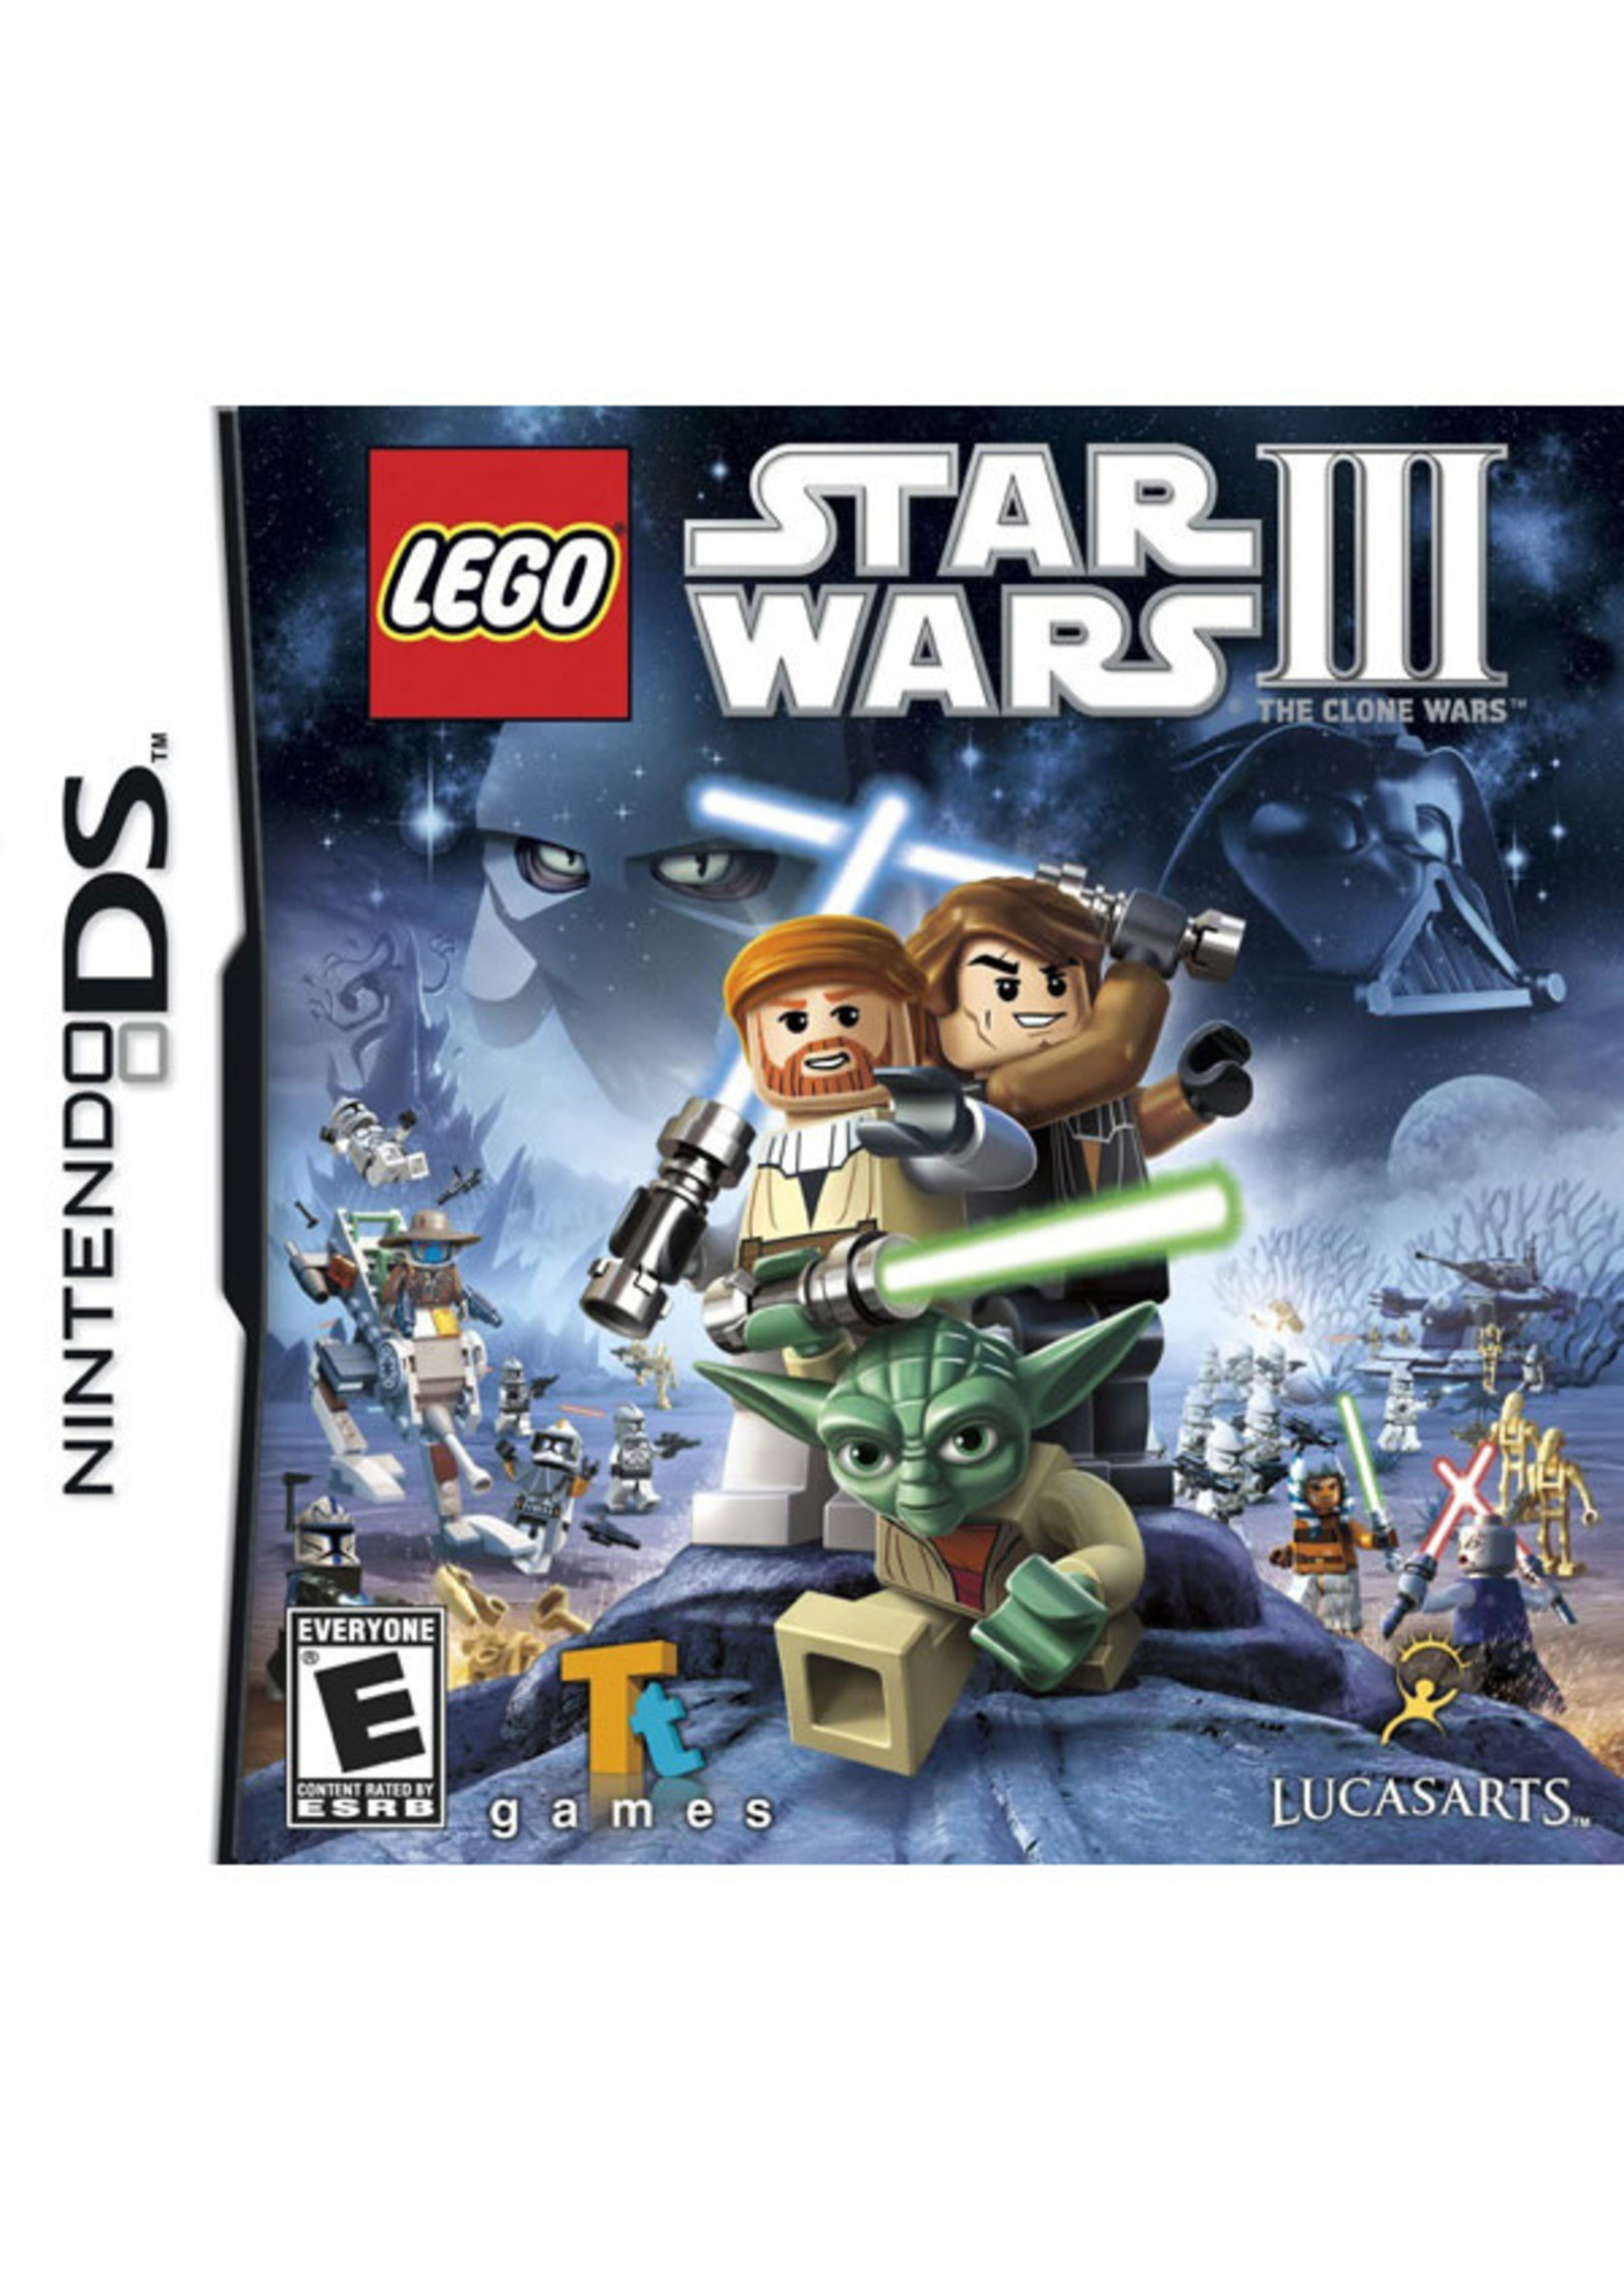 LEGO STAR WARS 3 THE CLONE WARS 3DS (USAGÉ)